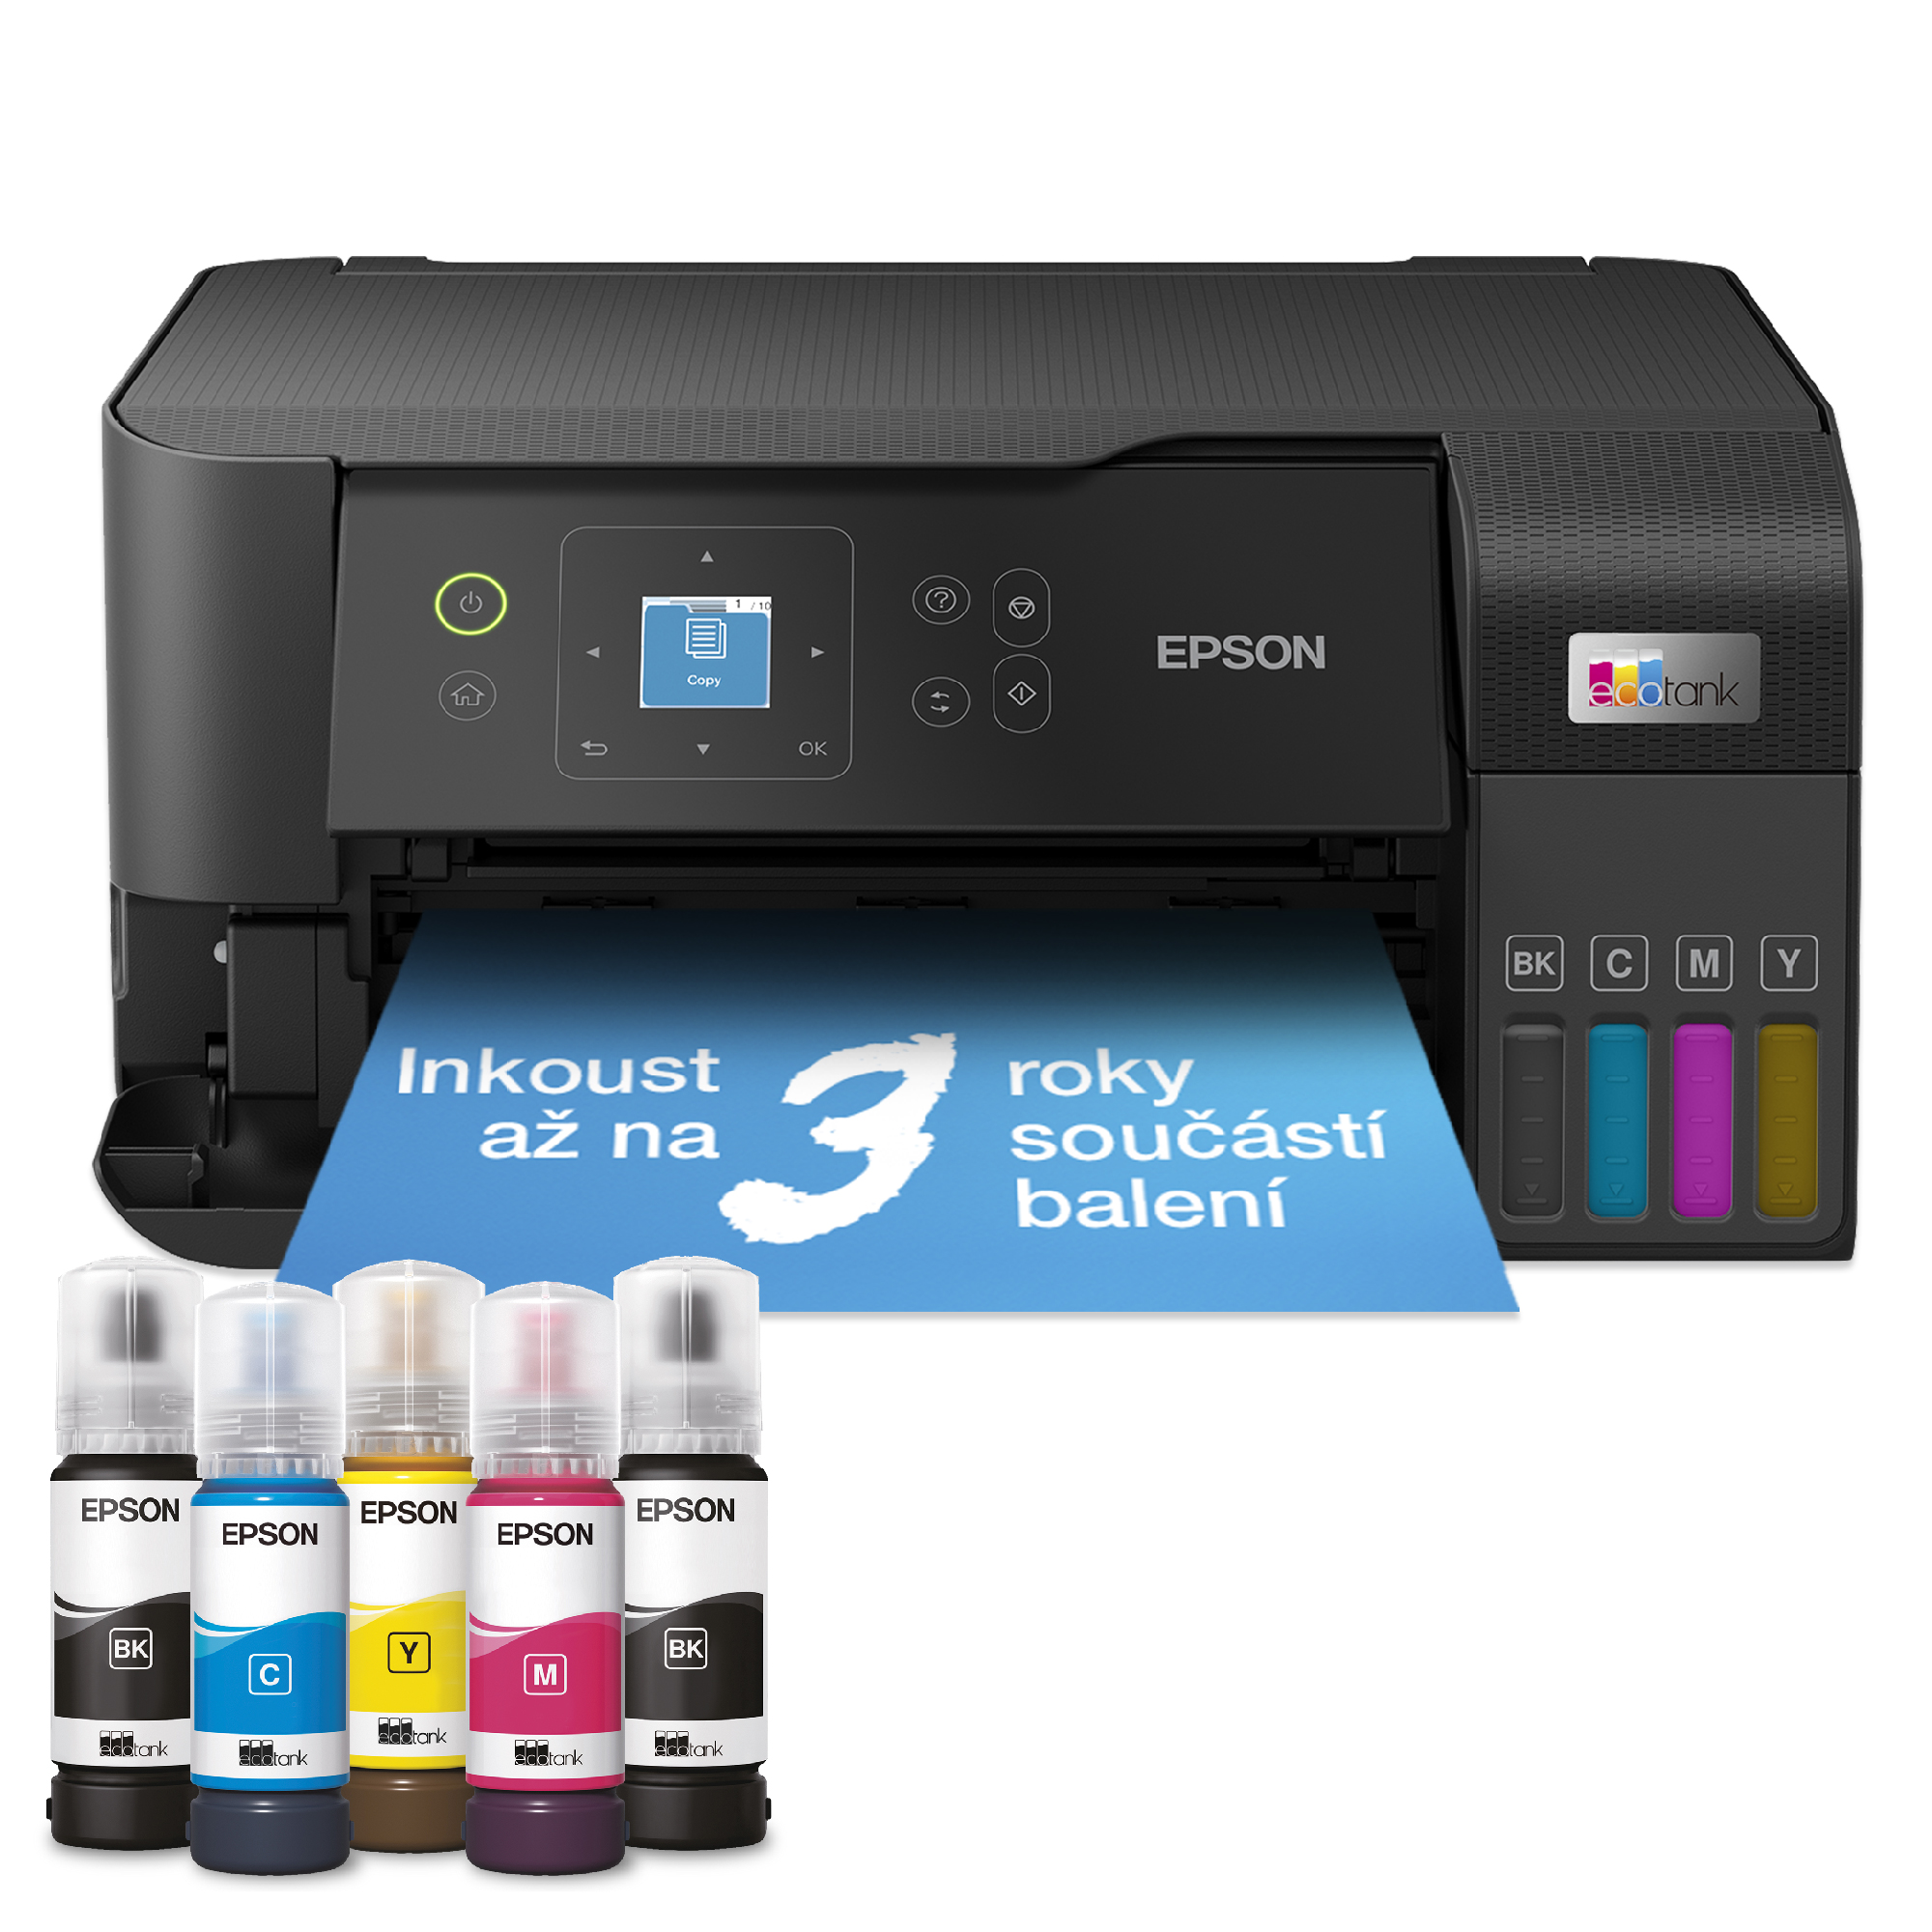 Epson EcoTank/ L3560/ MF/ Ink/ A4/ WiFi/ USB0 